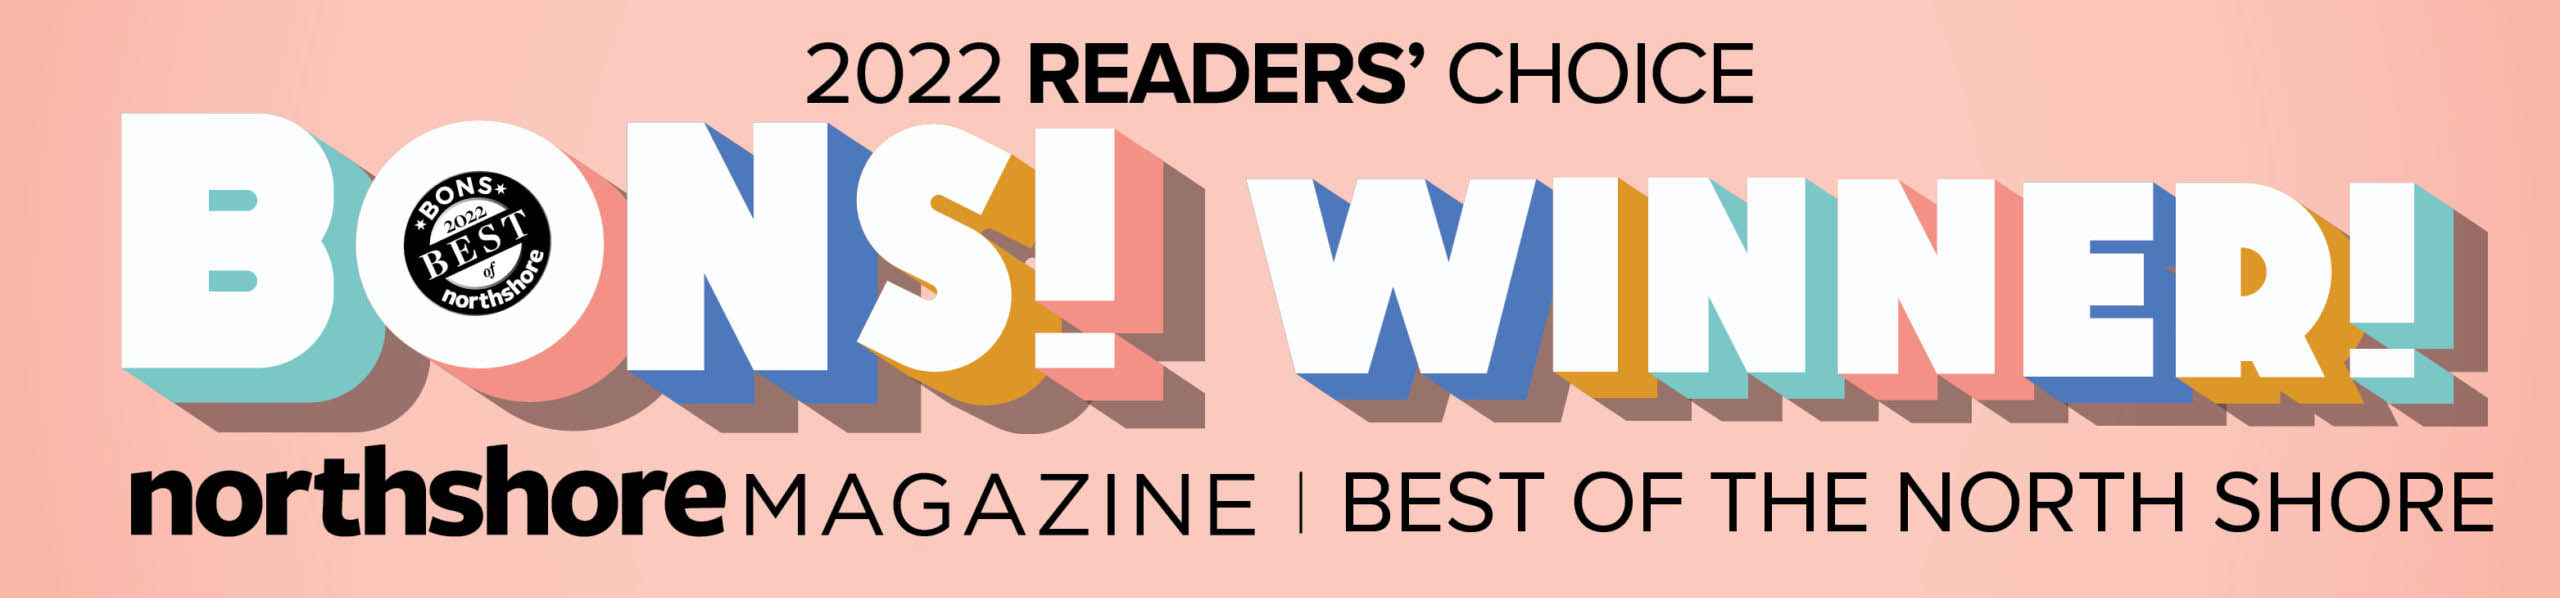 bons 2022 readers choice winner - Dayles spa